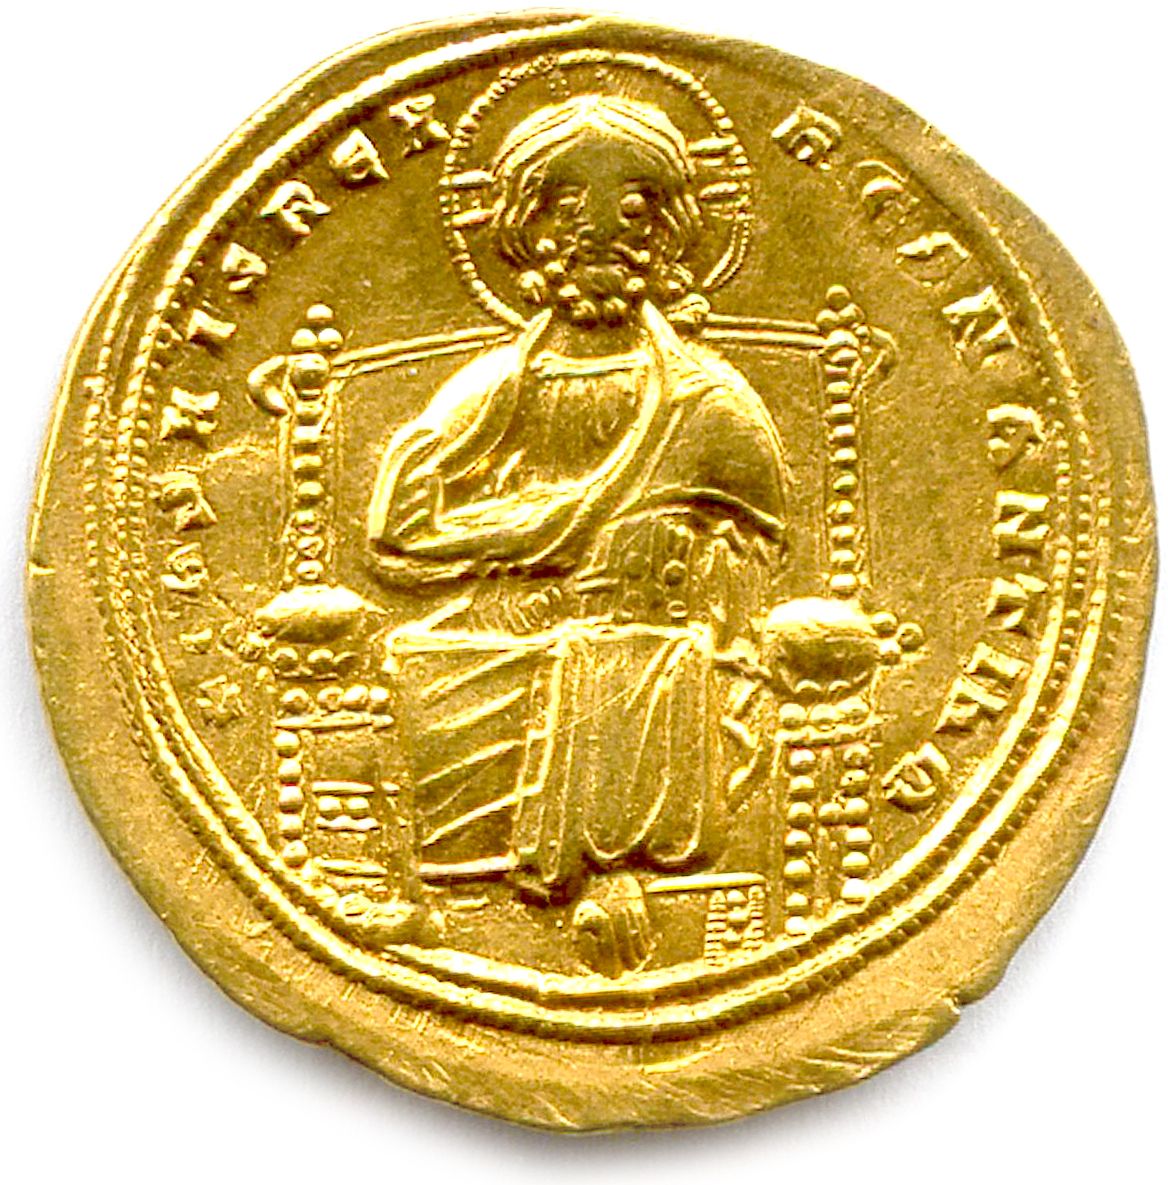 Null ROMAN III ARGYRA November 12, 1028 - April 11, 1034

IhS XIS REX REGNANTInm&hellip;